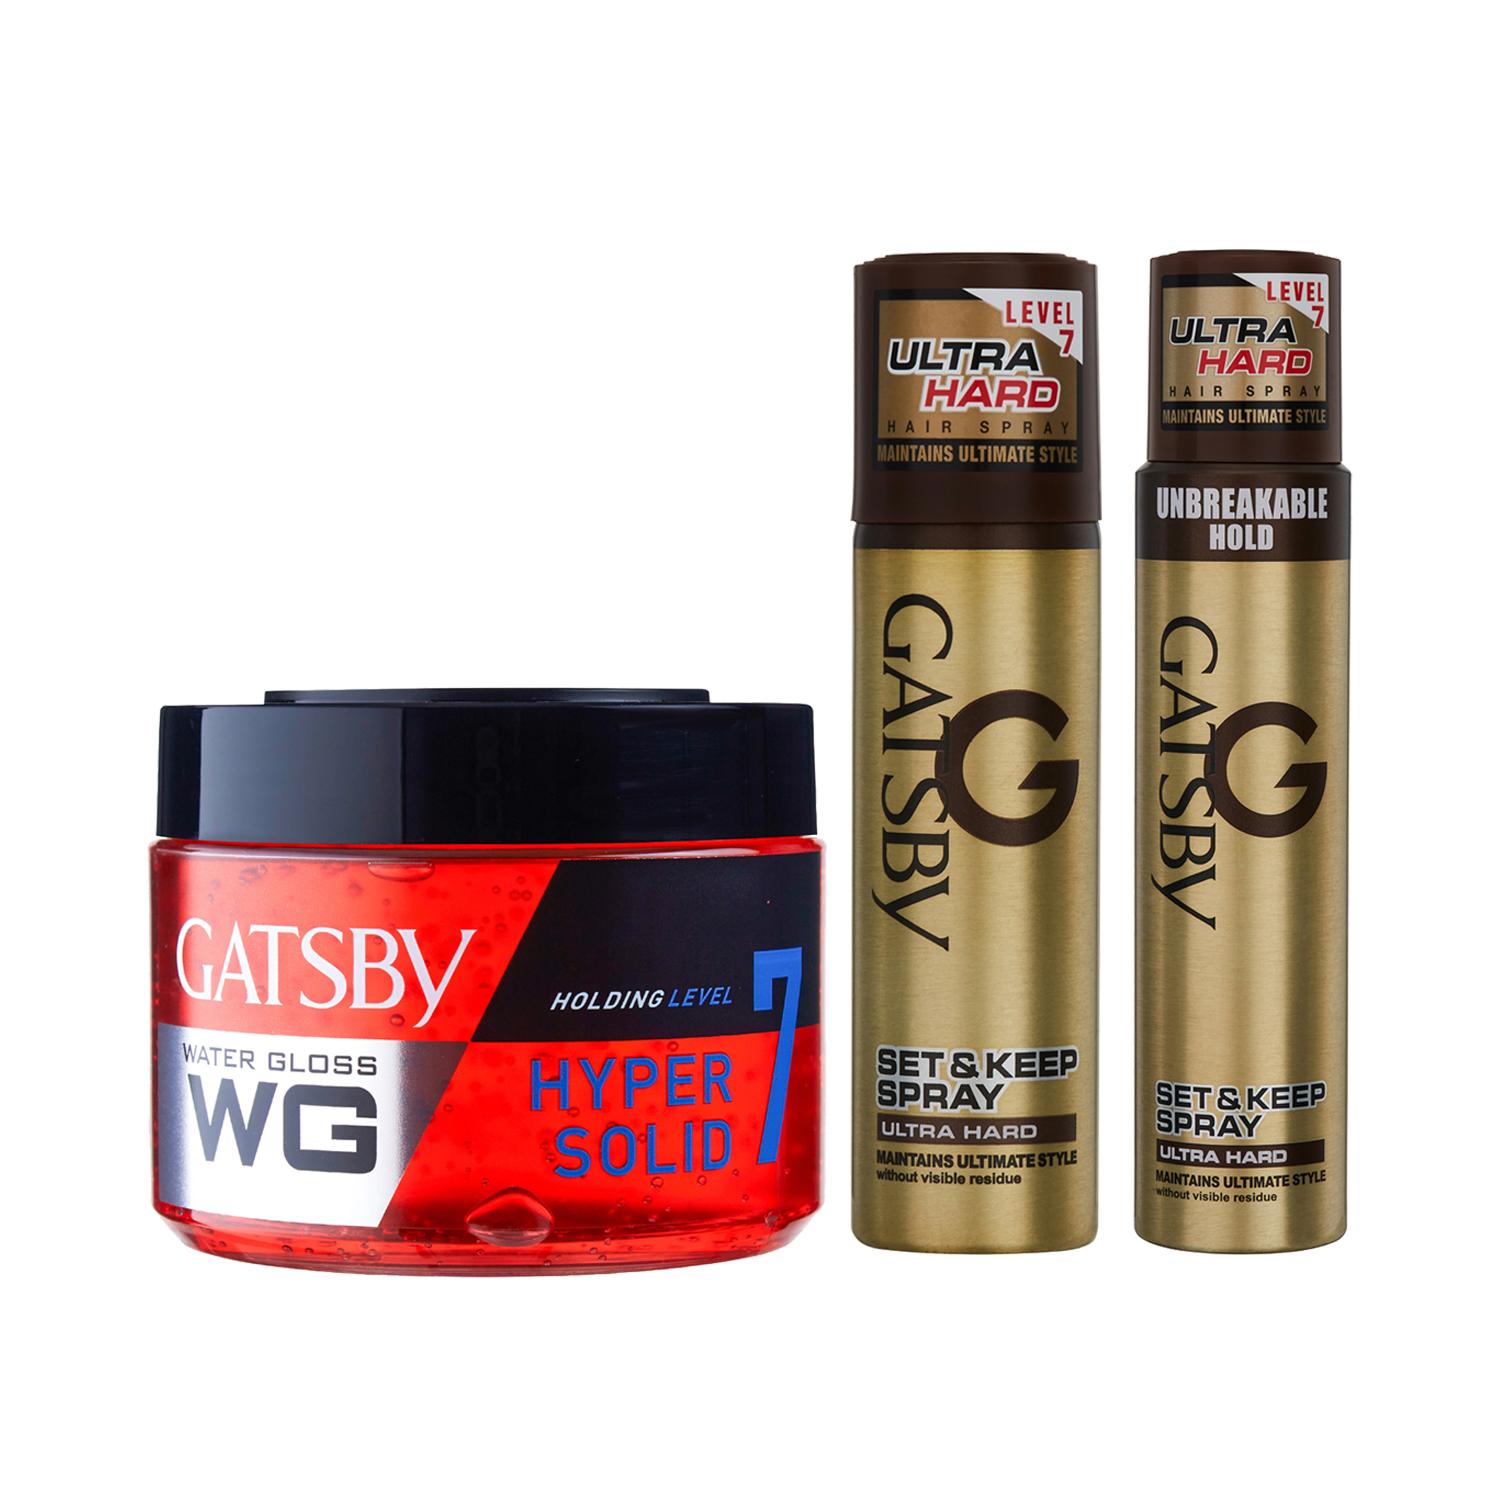 Gatsby Level 7 Hard Set & Hair Spray , Gloss Hyper Solid, Hard Set & Keep Hair Spray Combo